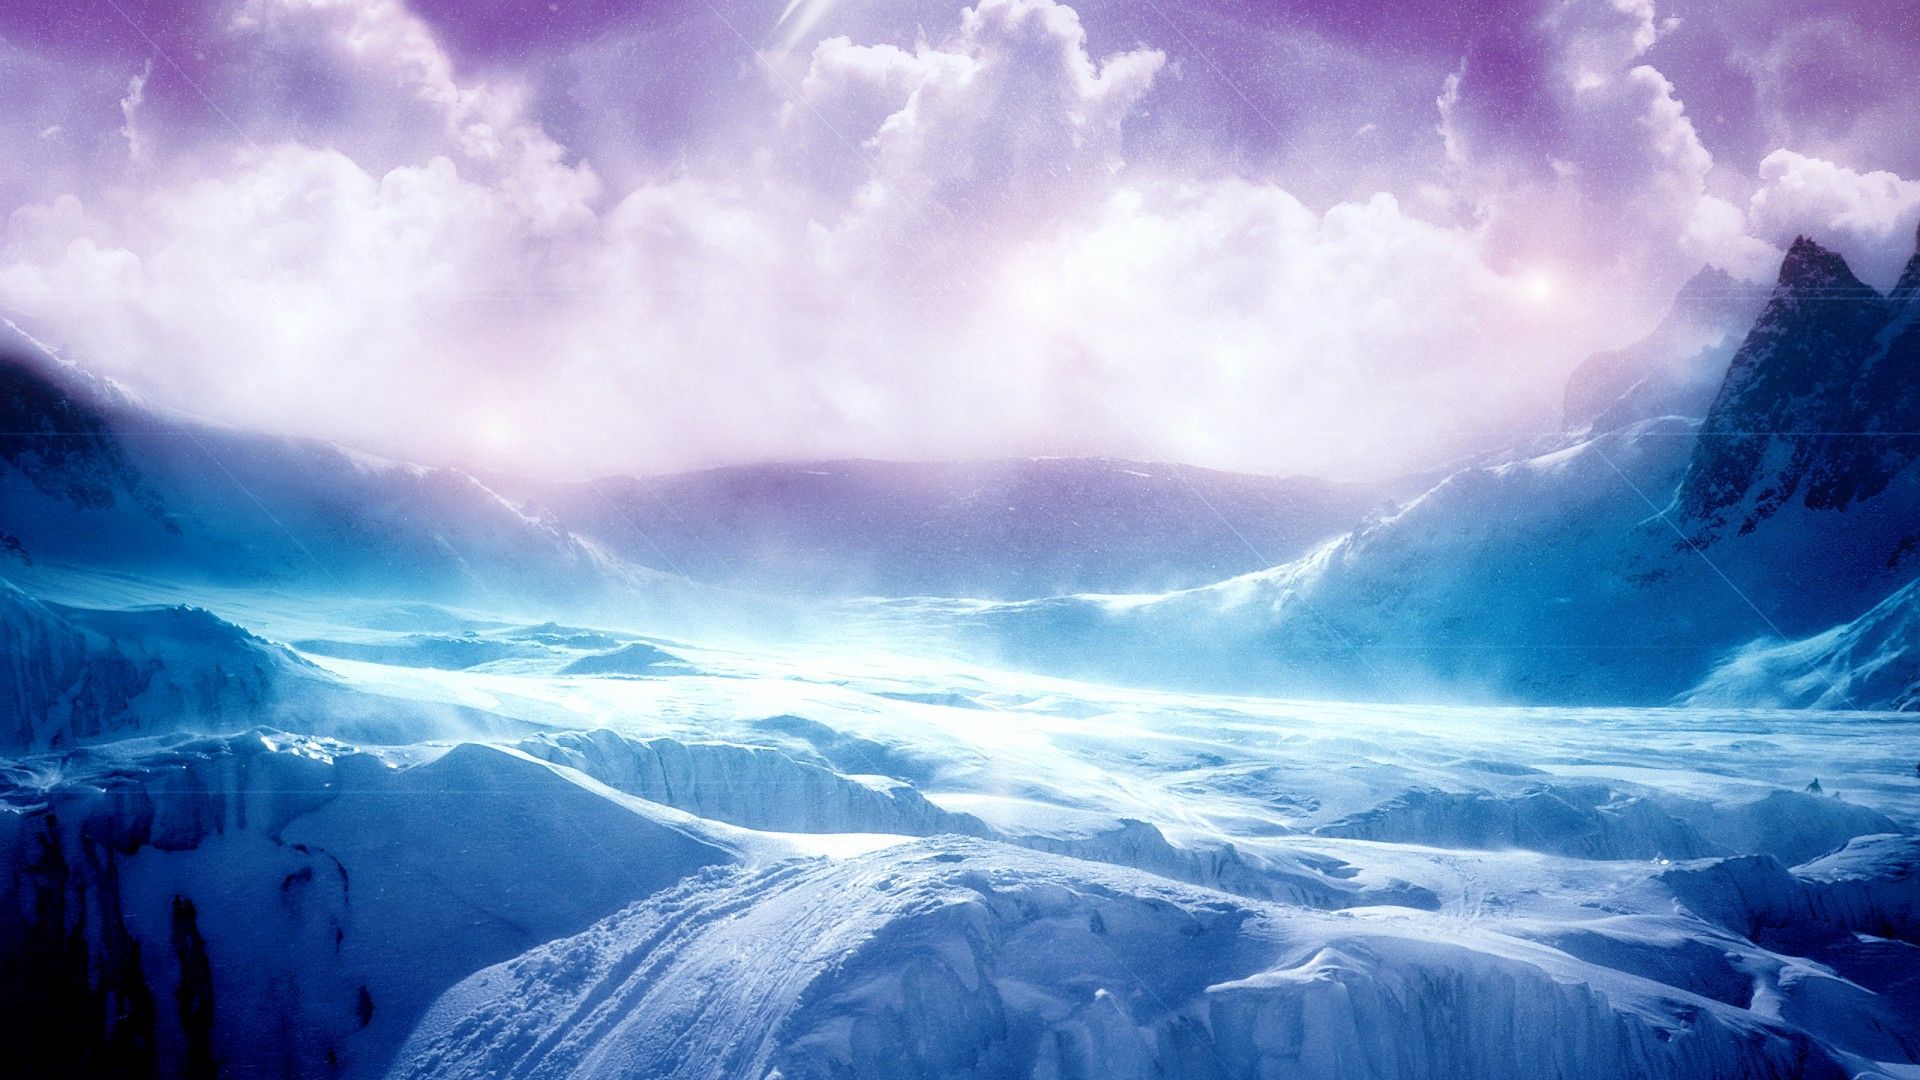 High resolution ice terrain wallpaper - HD Backgrounds